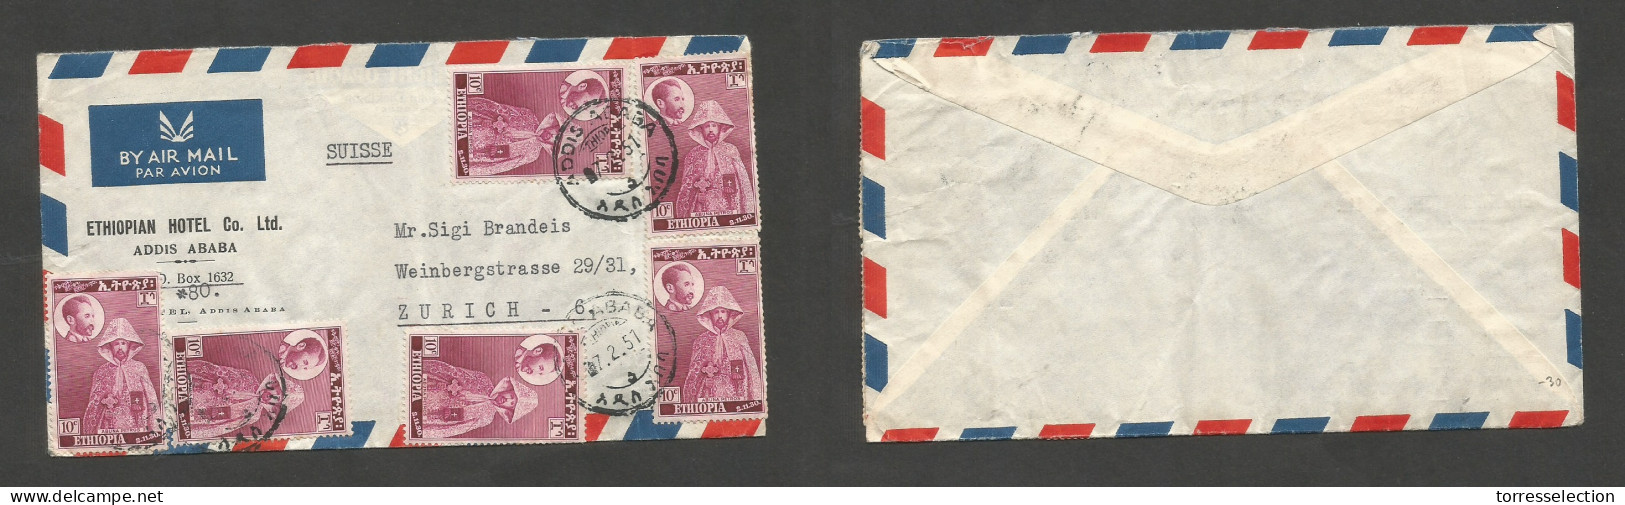 ETHIOPIA. 1951 (7 Febr) Addis Ababa - Zurich, Switzerland. Air Multifkd Env, Tied Cds, At 60c Rate. V. Appealing. SALE. - Etiopia